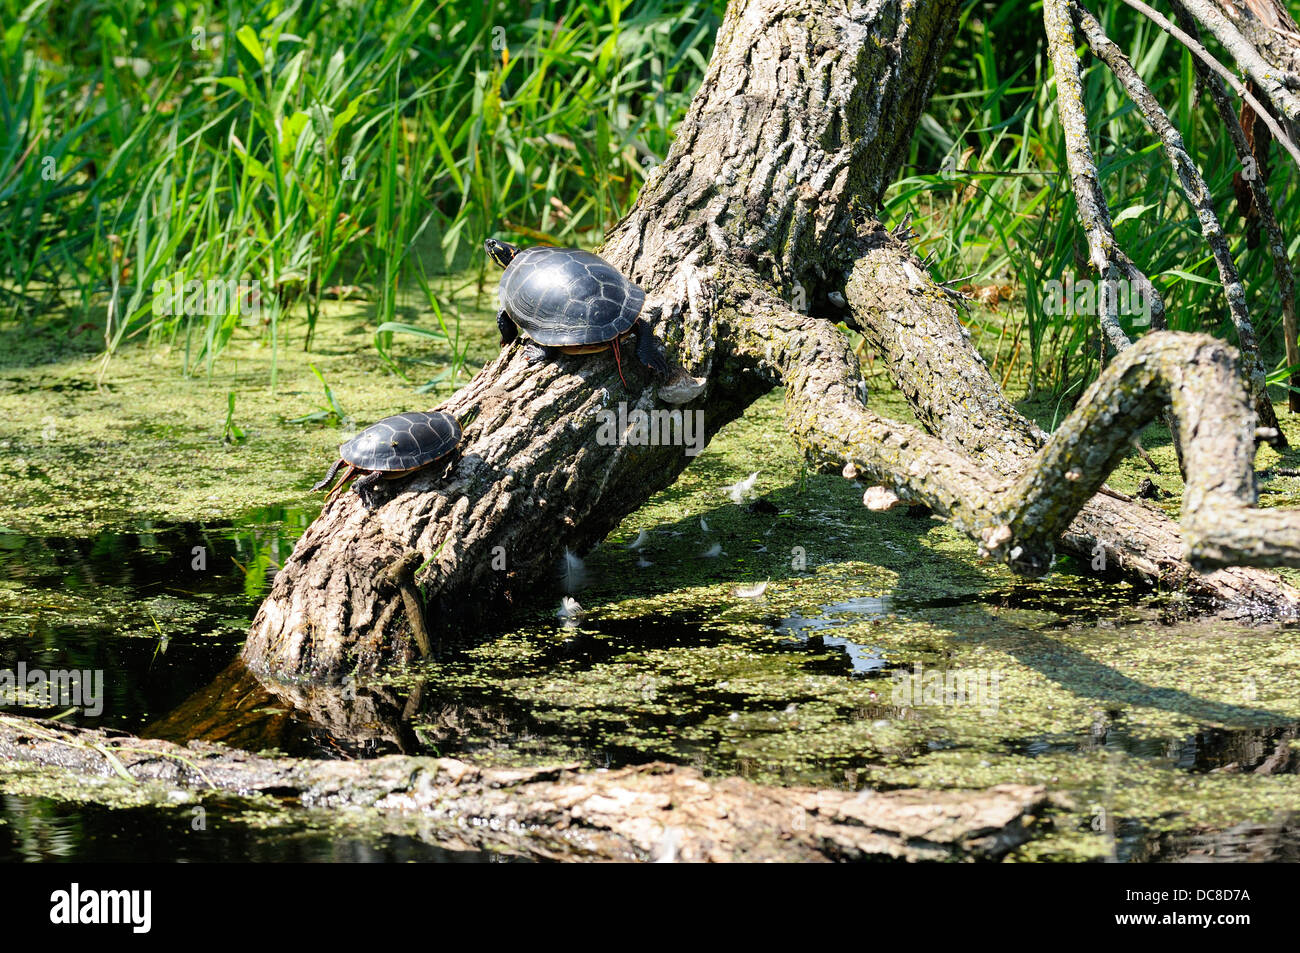 https://c8.alamy.com/comp/DC8D7A/painted-turtles-sunning-on-woodland-marsh-DC8D7A.jpg